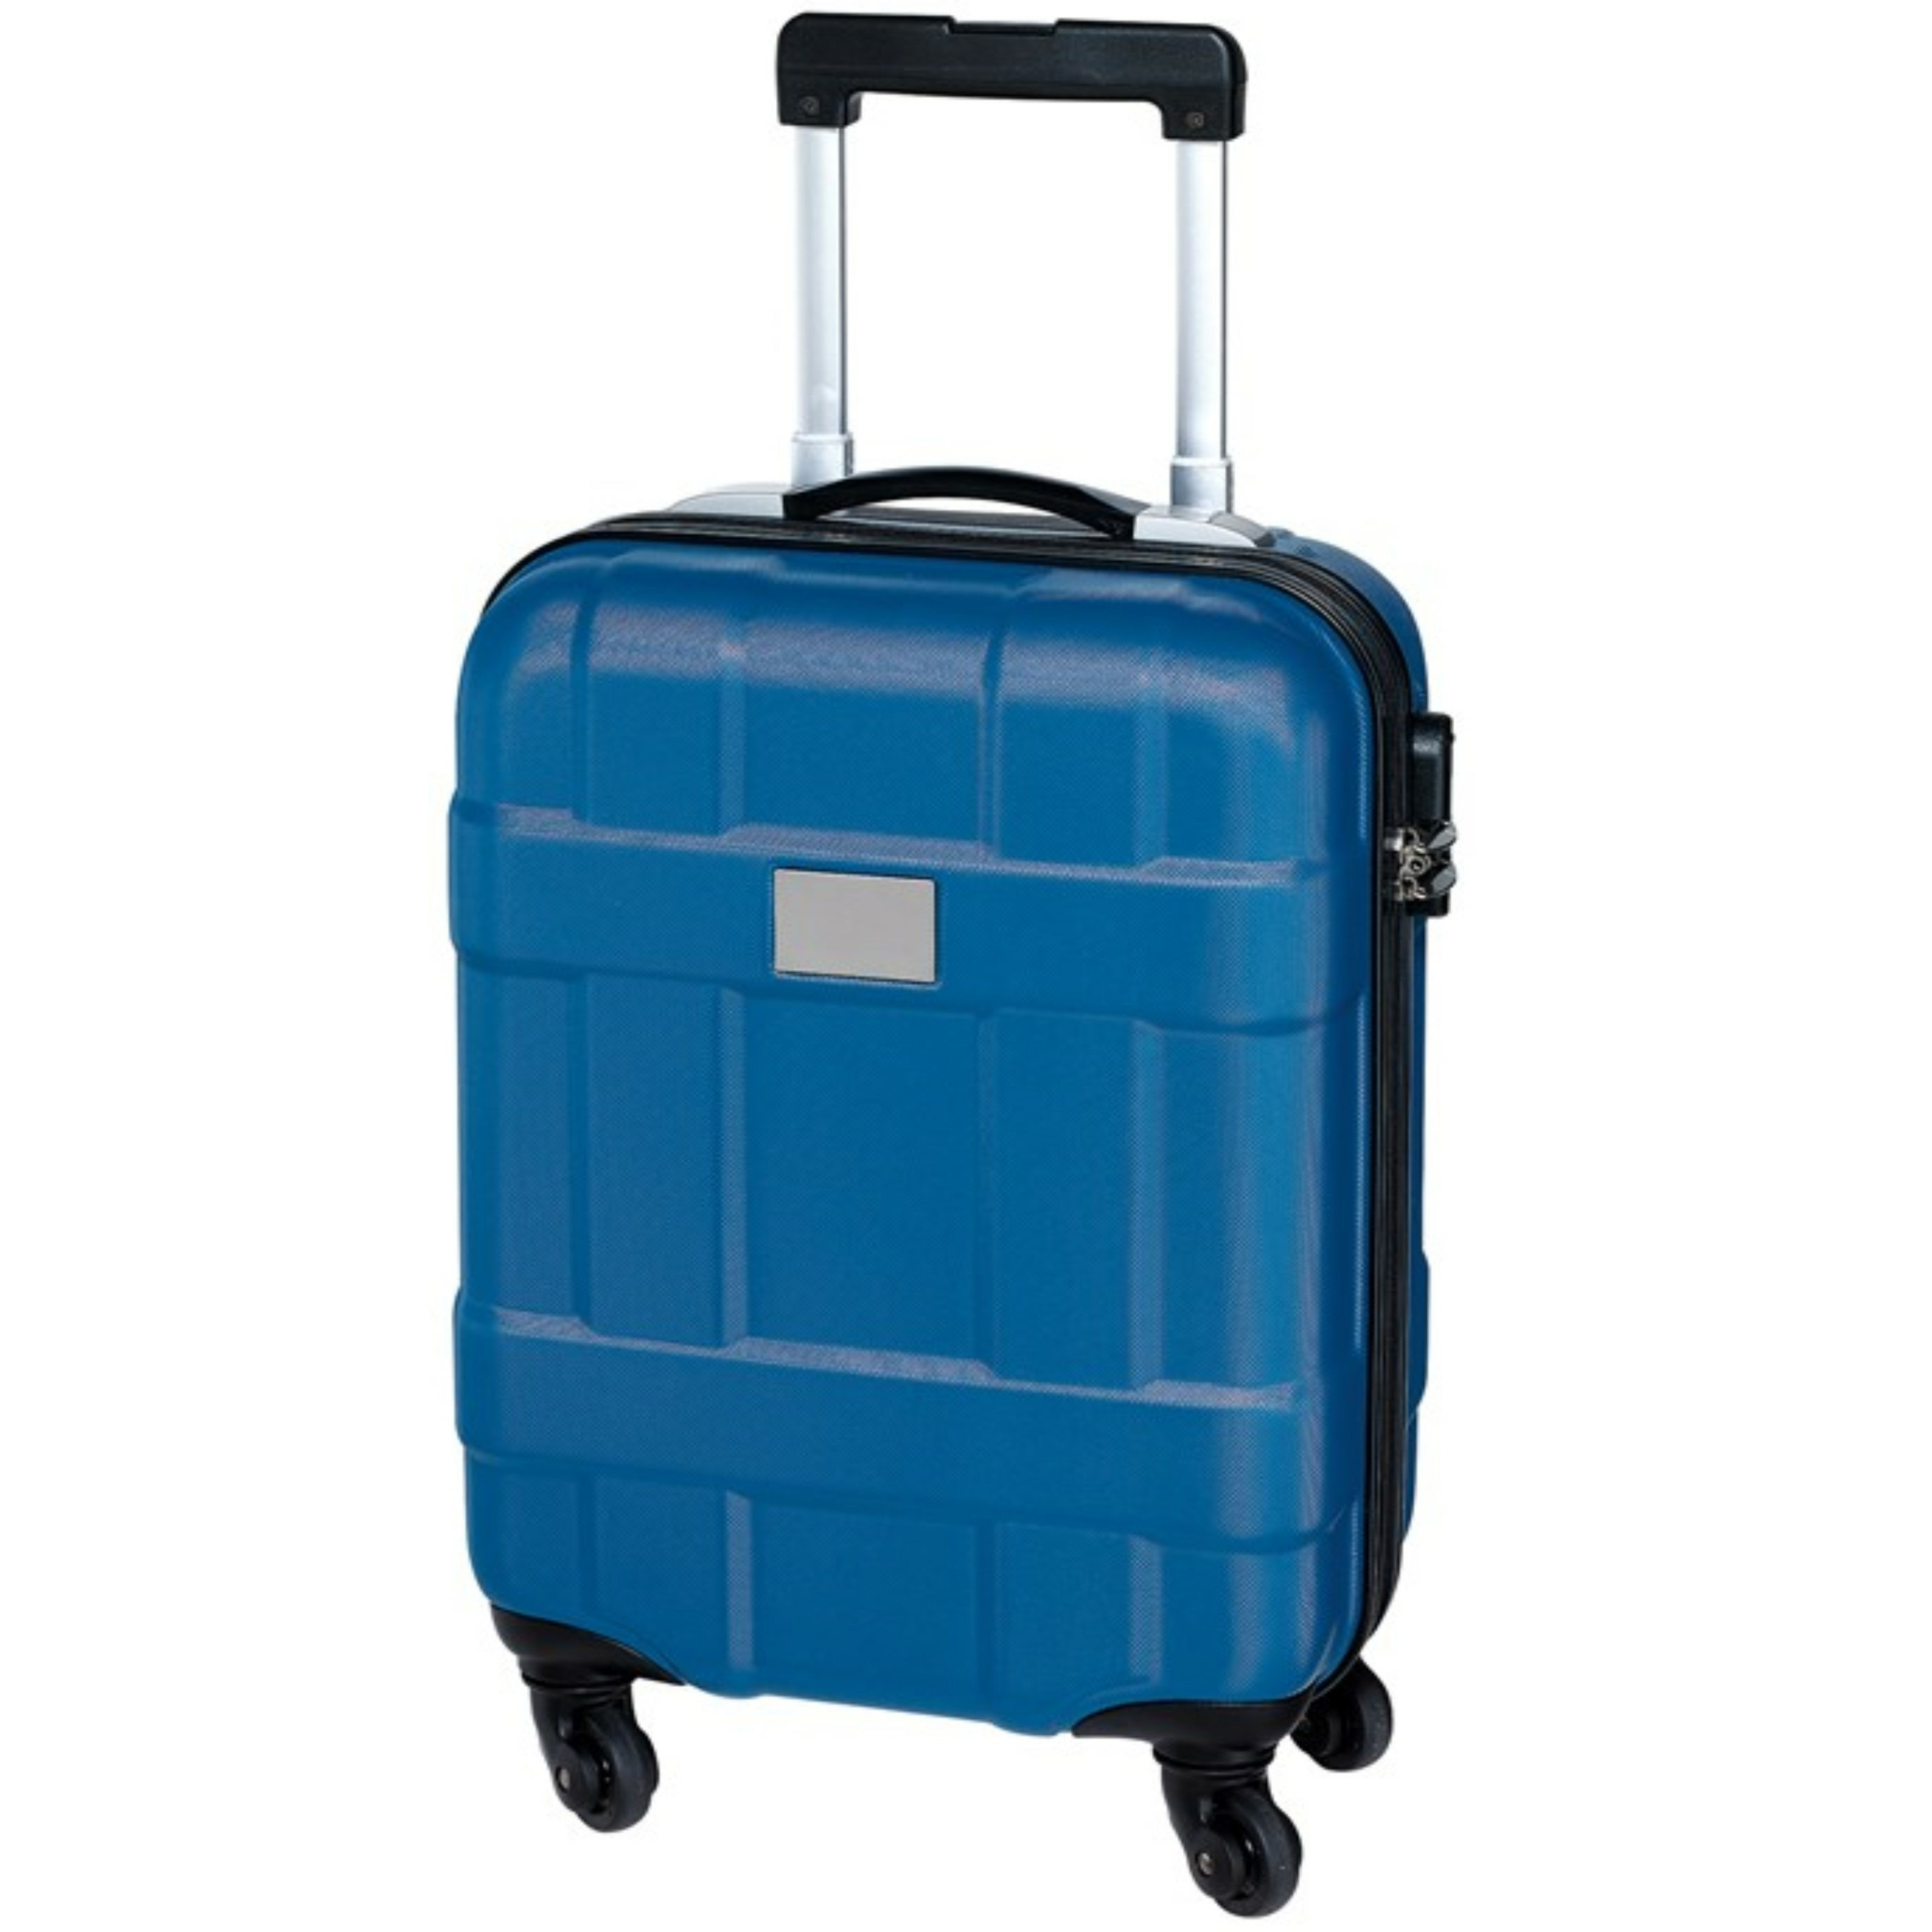 Cabine handbagage reis trolley koffer met zwenkwielen 55 x 35 x 20 cm blauw